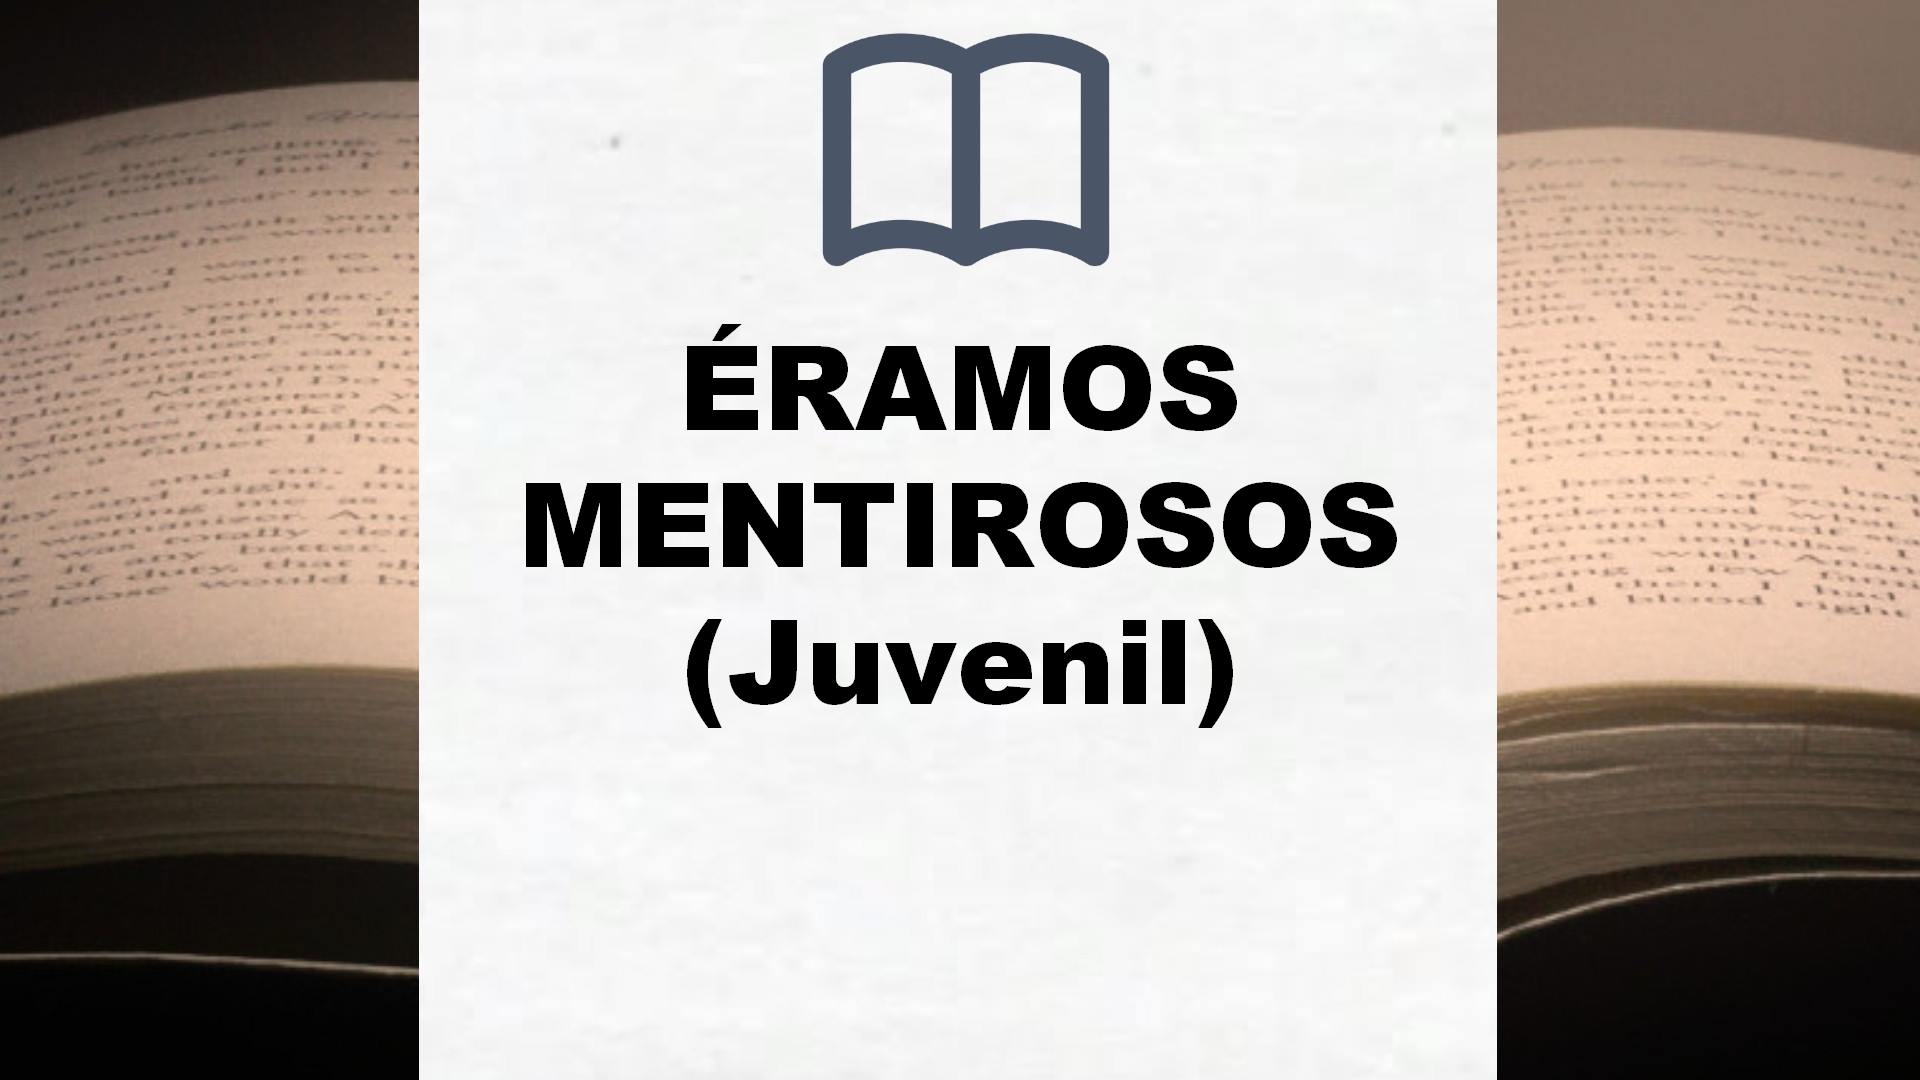 ÉRAMOS MENTIROSOS (Juvenil) – Reseña del libro